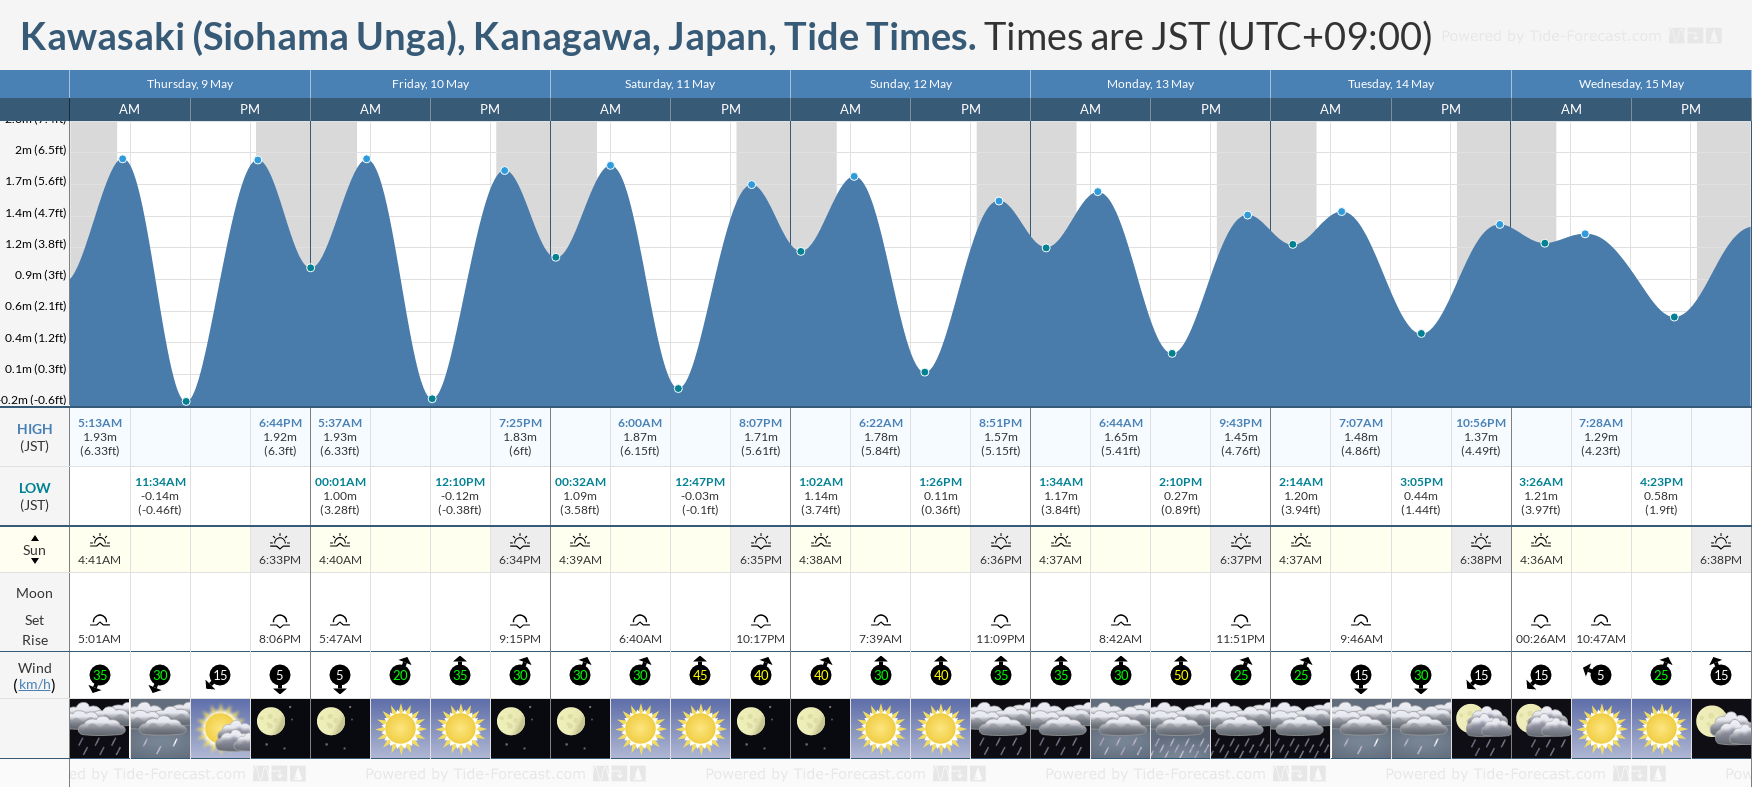 Kawasaki (Siohama Unga), Kanagawa, Japan Tide Chart including high and low tide tide times for the next 7 days